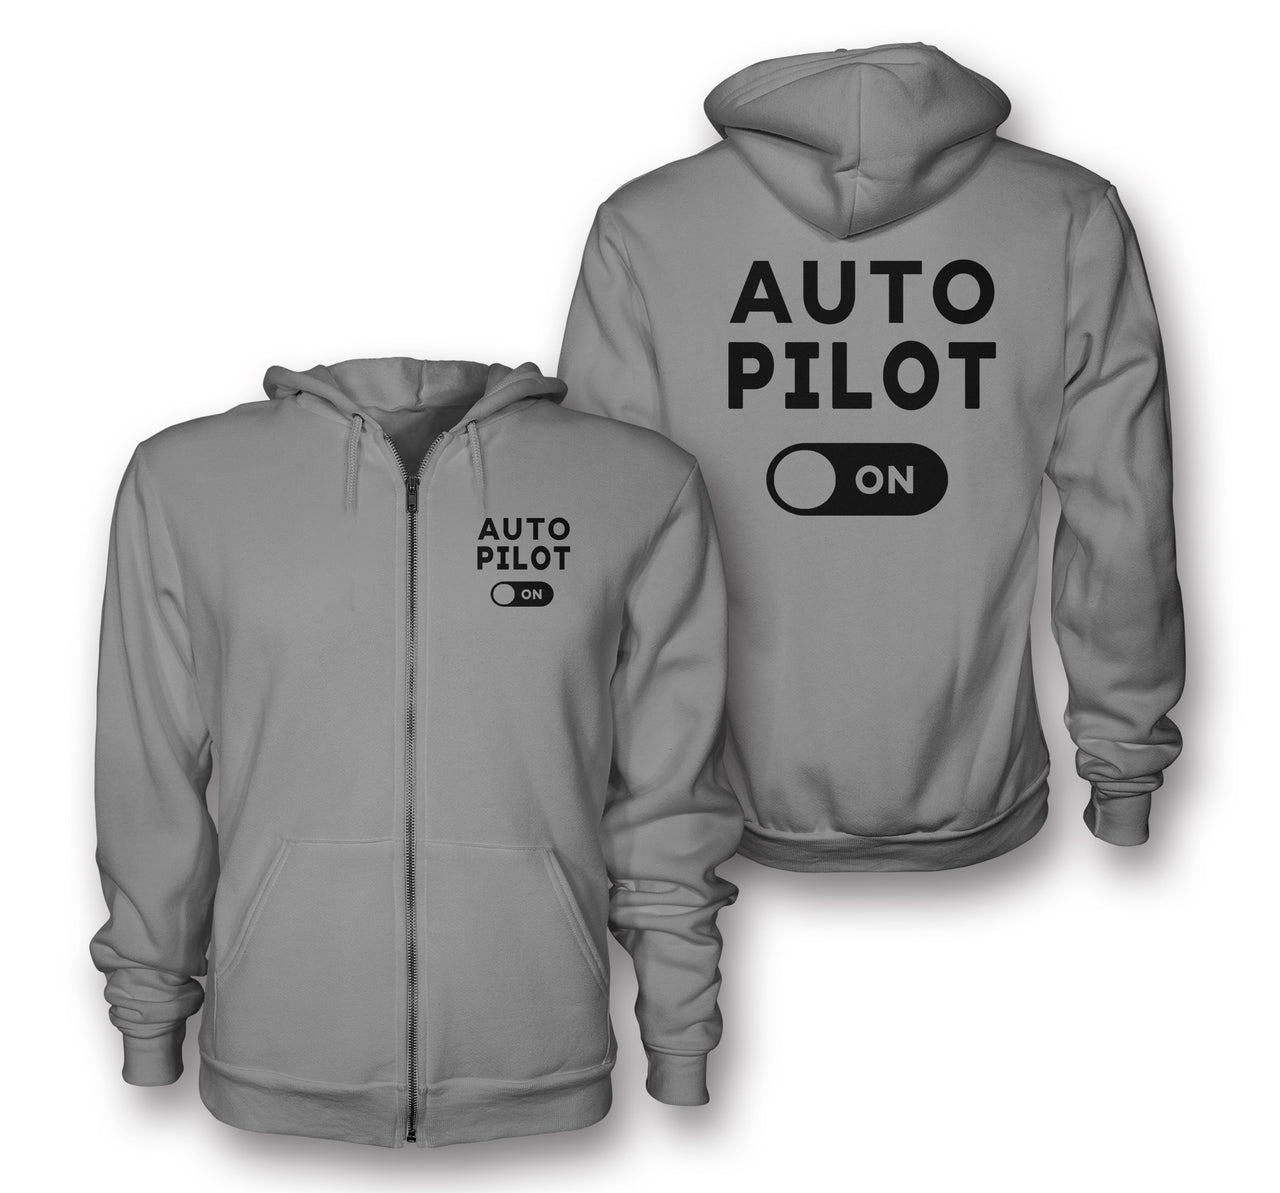 Auto Pilot ON Designed Zipped Hoodies